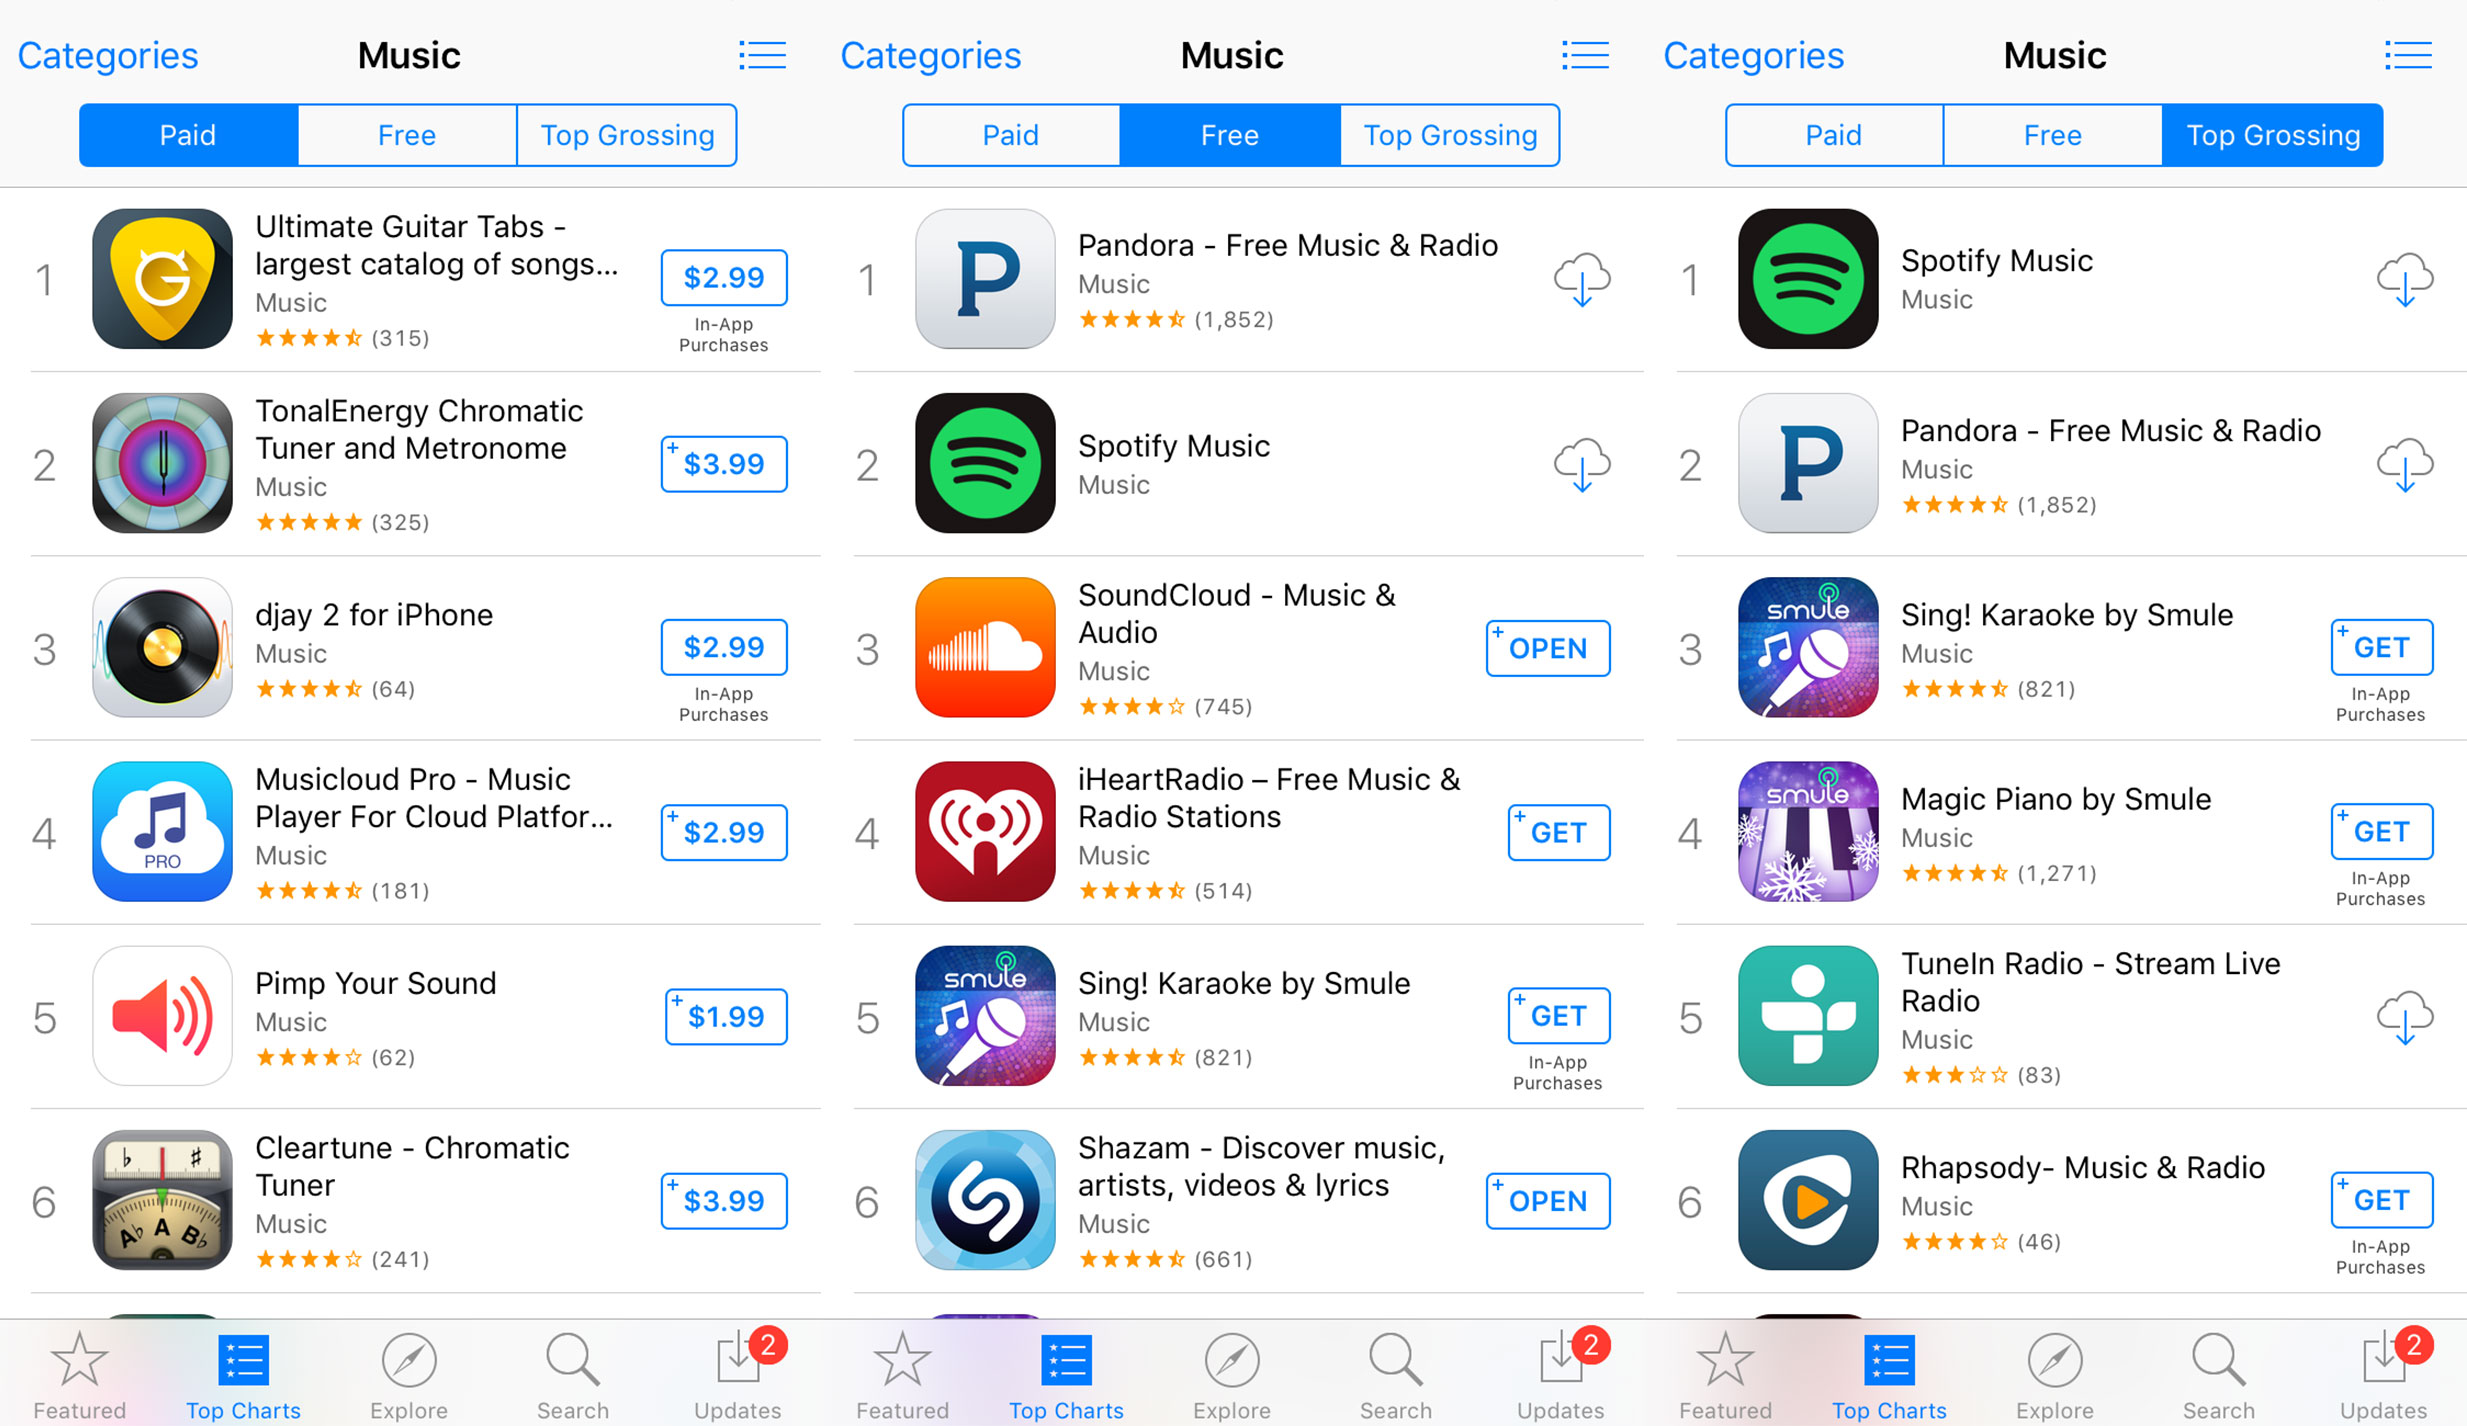 mobile app analytics on music apps